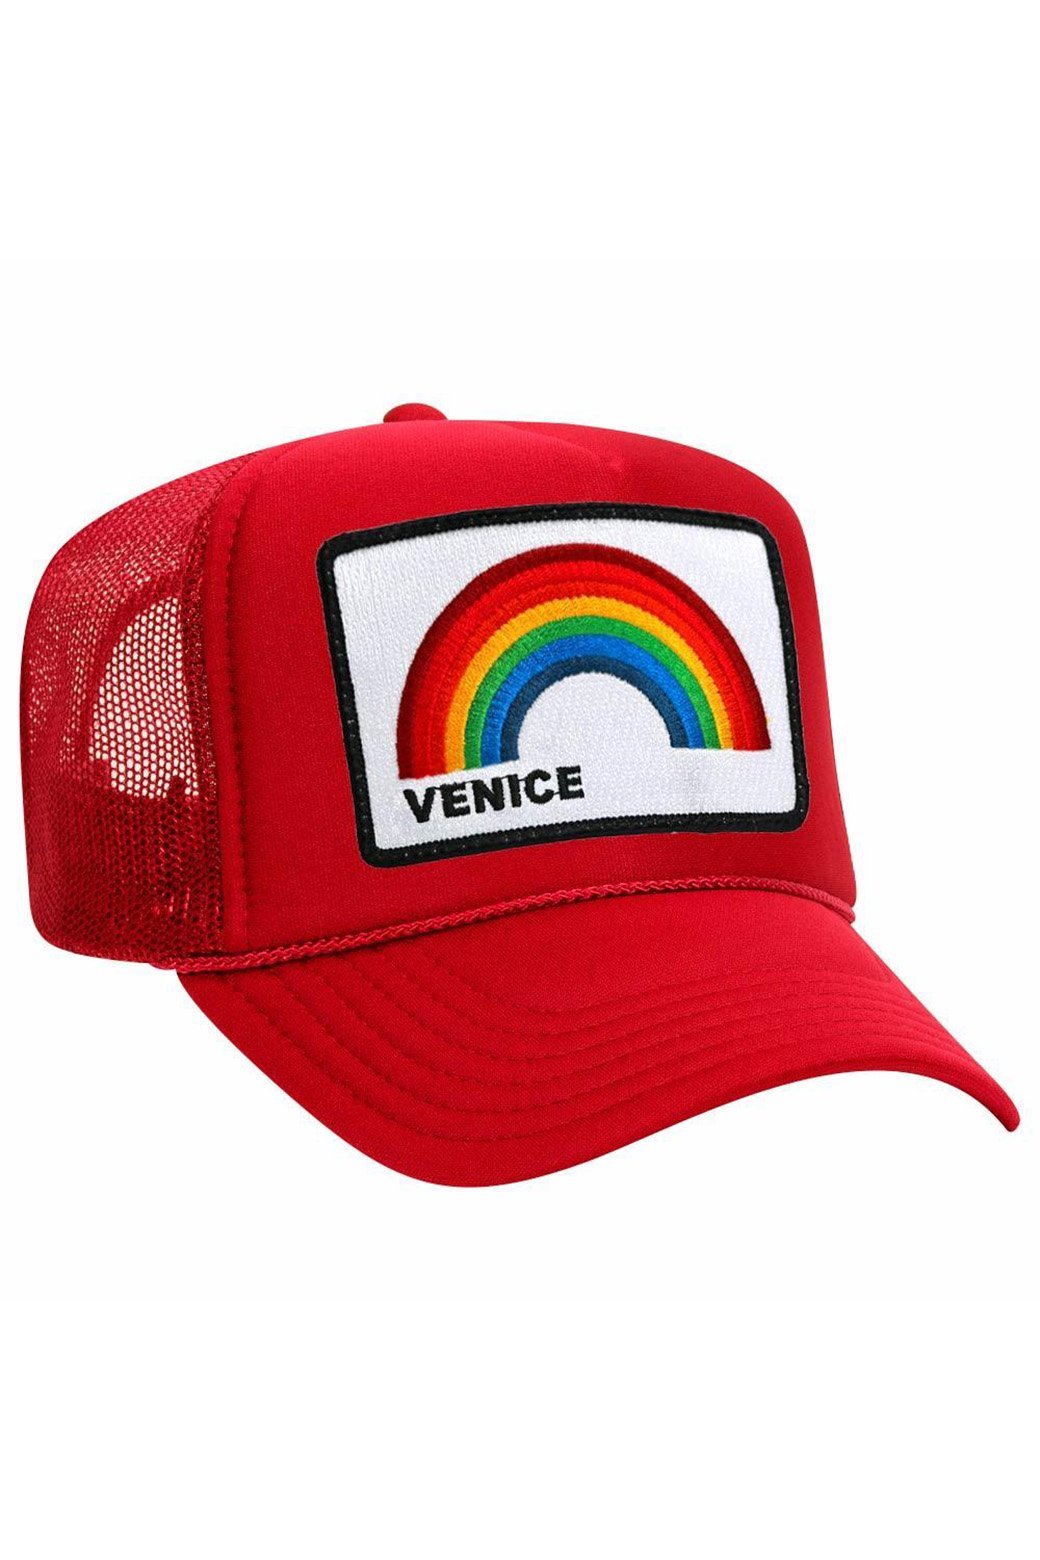 VENICE RAINBOW TRUCKER HAT HATS Aviator Nation OS RED 